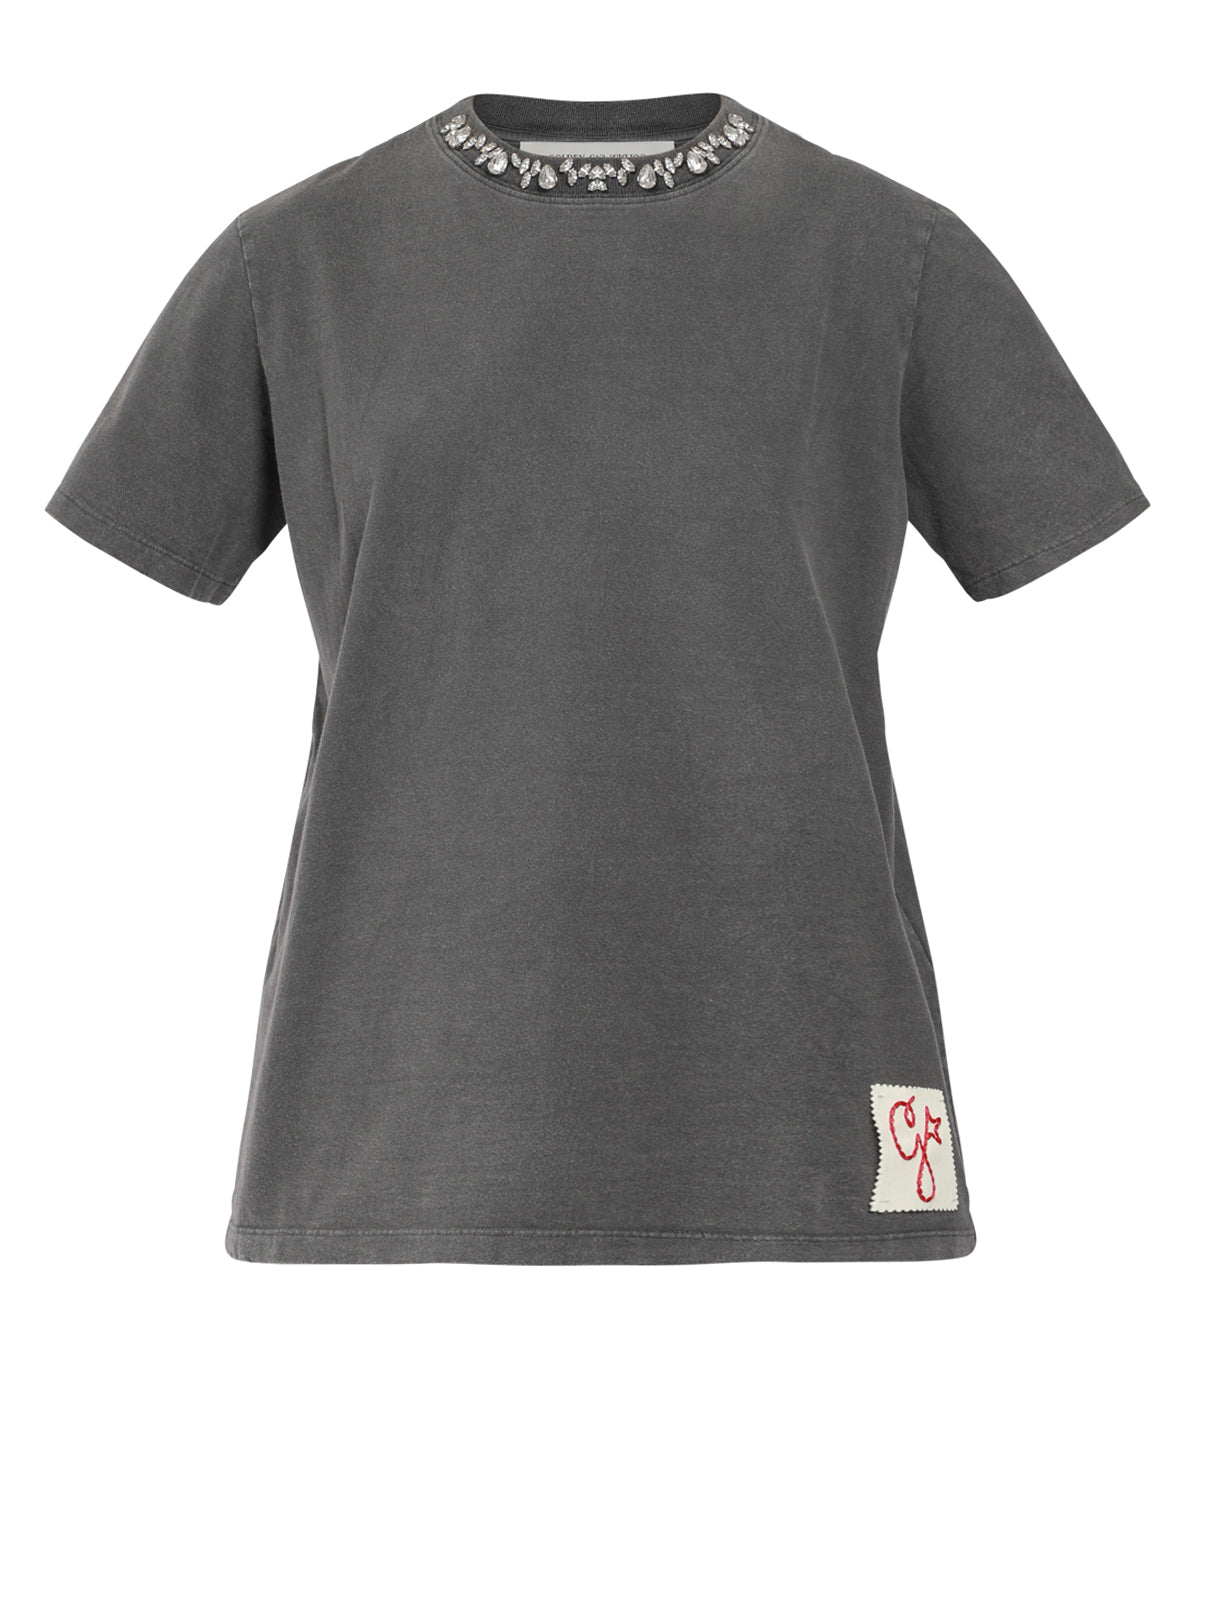 Jewel Neck Distressed Jersey T-Shirt